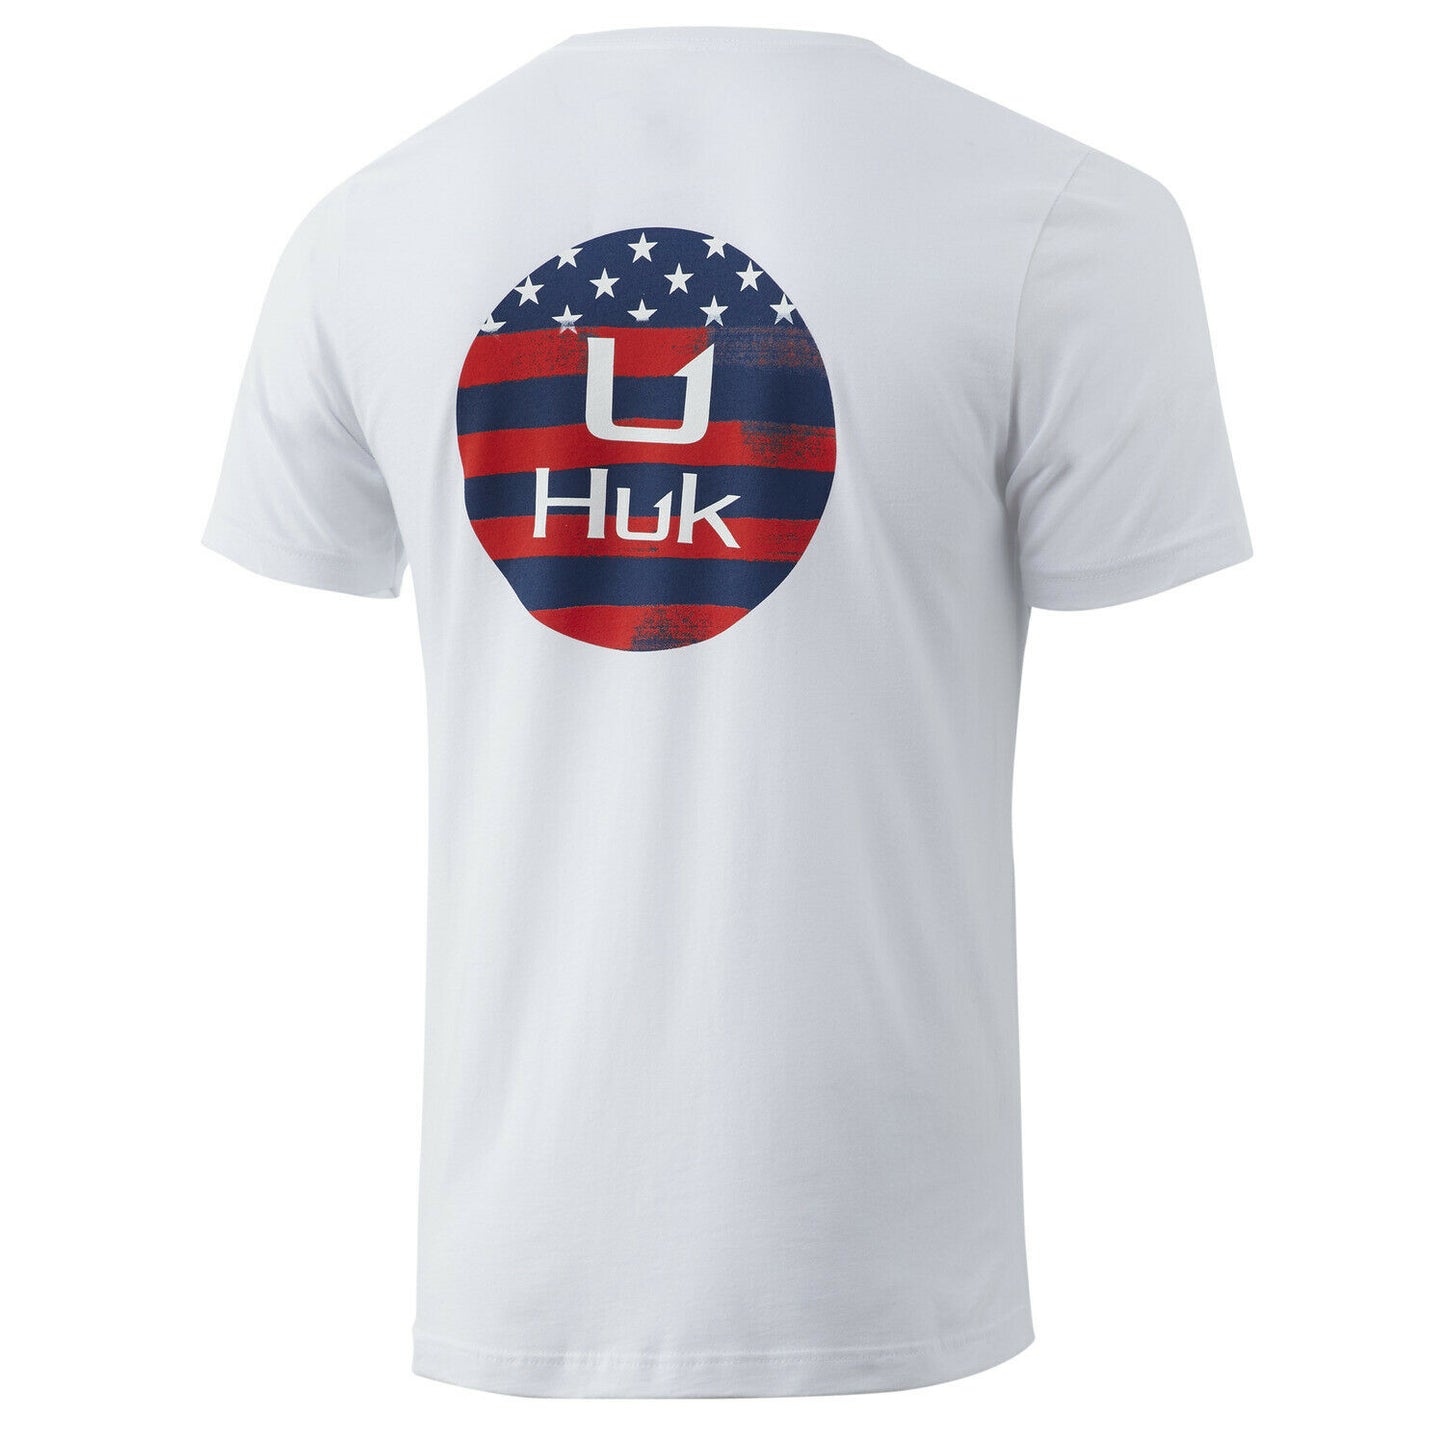 Huk - KC American Pride Lightweight Tee H1000261 - Choose Size / Color